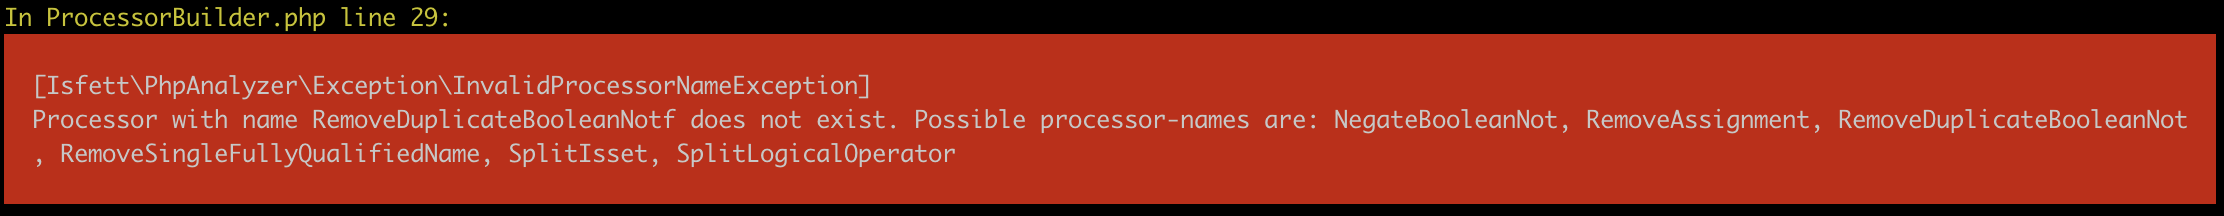 processorexception.png